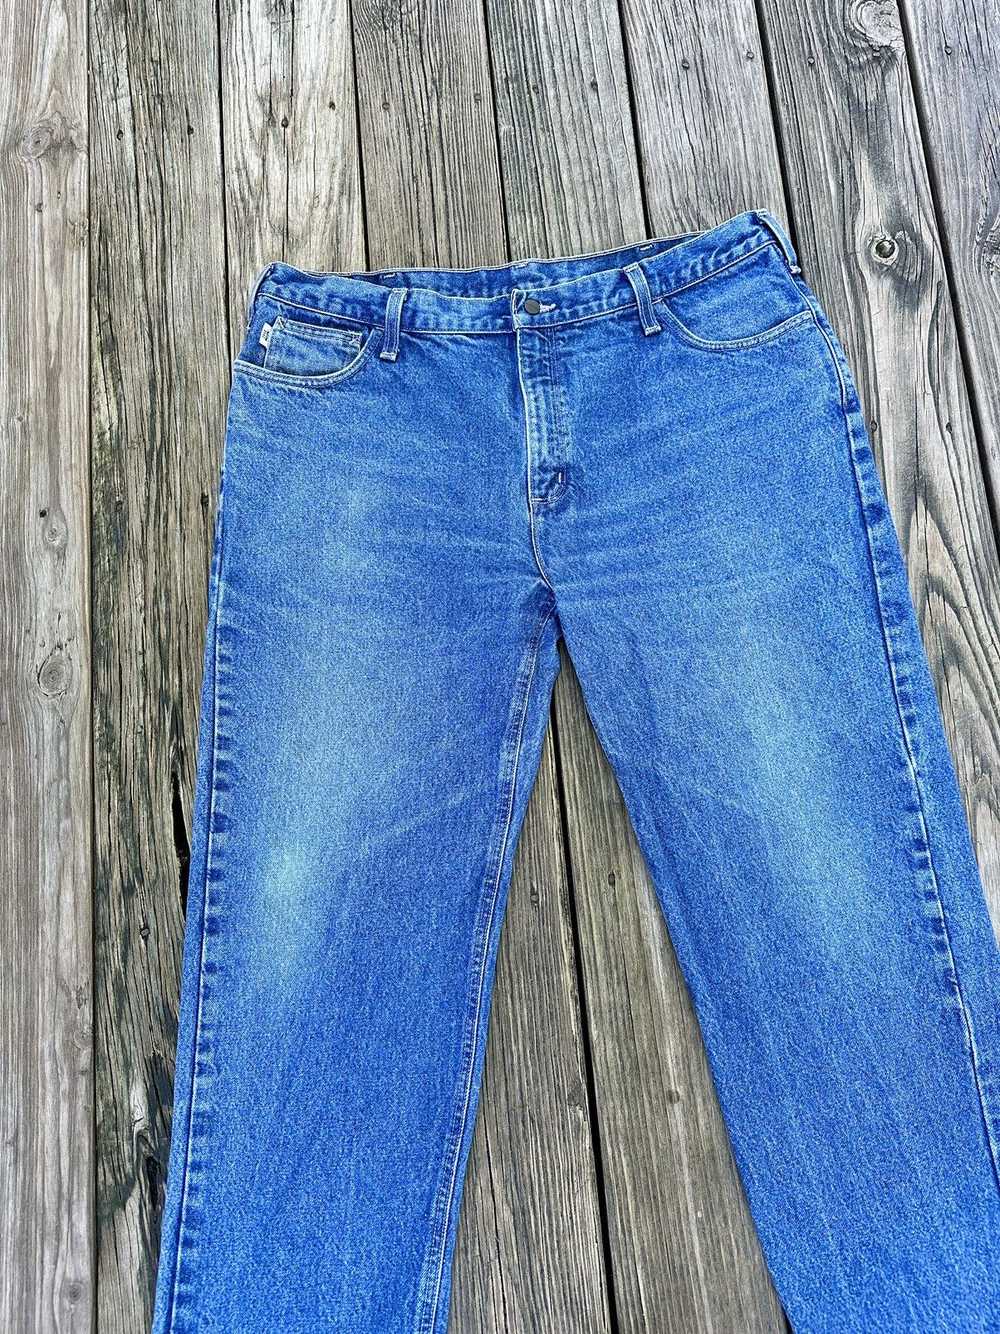 Carhartt Carhartt Fire Resistant Jeans - image 4